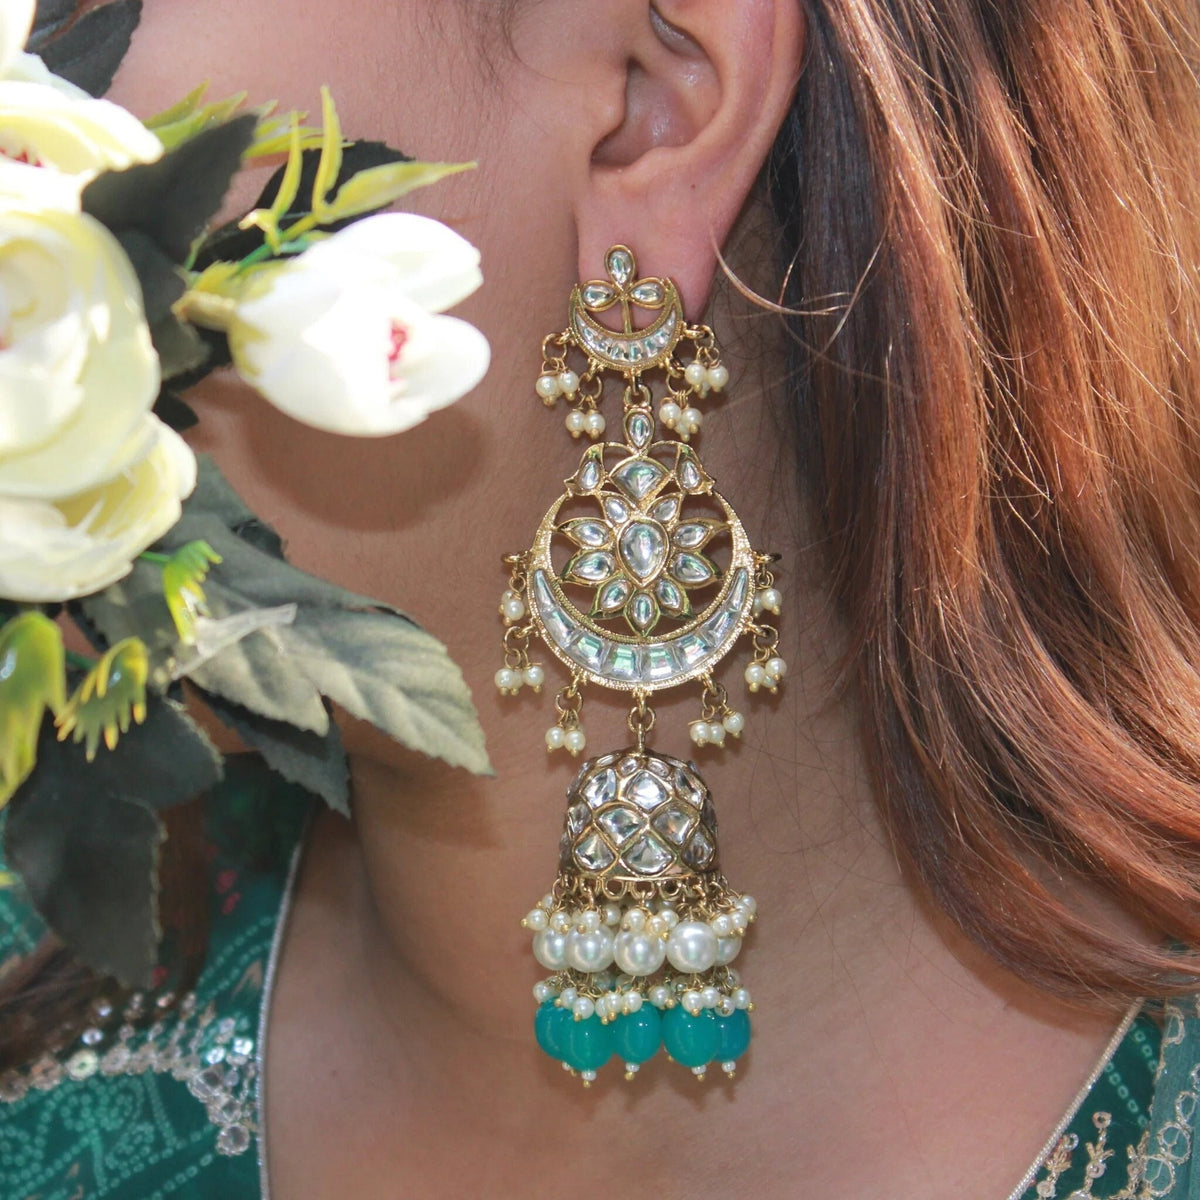 Monalisa stone kundan and pearl Jhumkas, Kundan Stone earrings with pearl drops, Chandbali Jhumkas Jewelry, Indian Jumkas, bridal jewelry